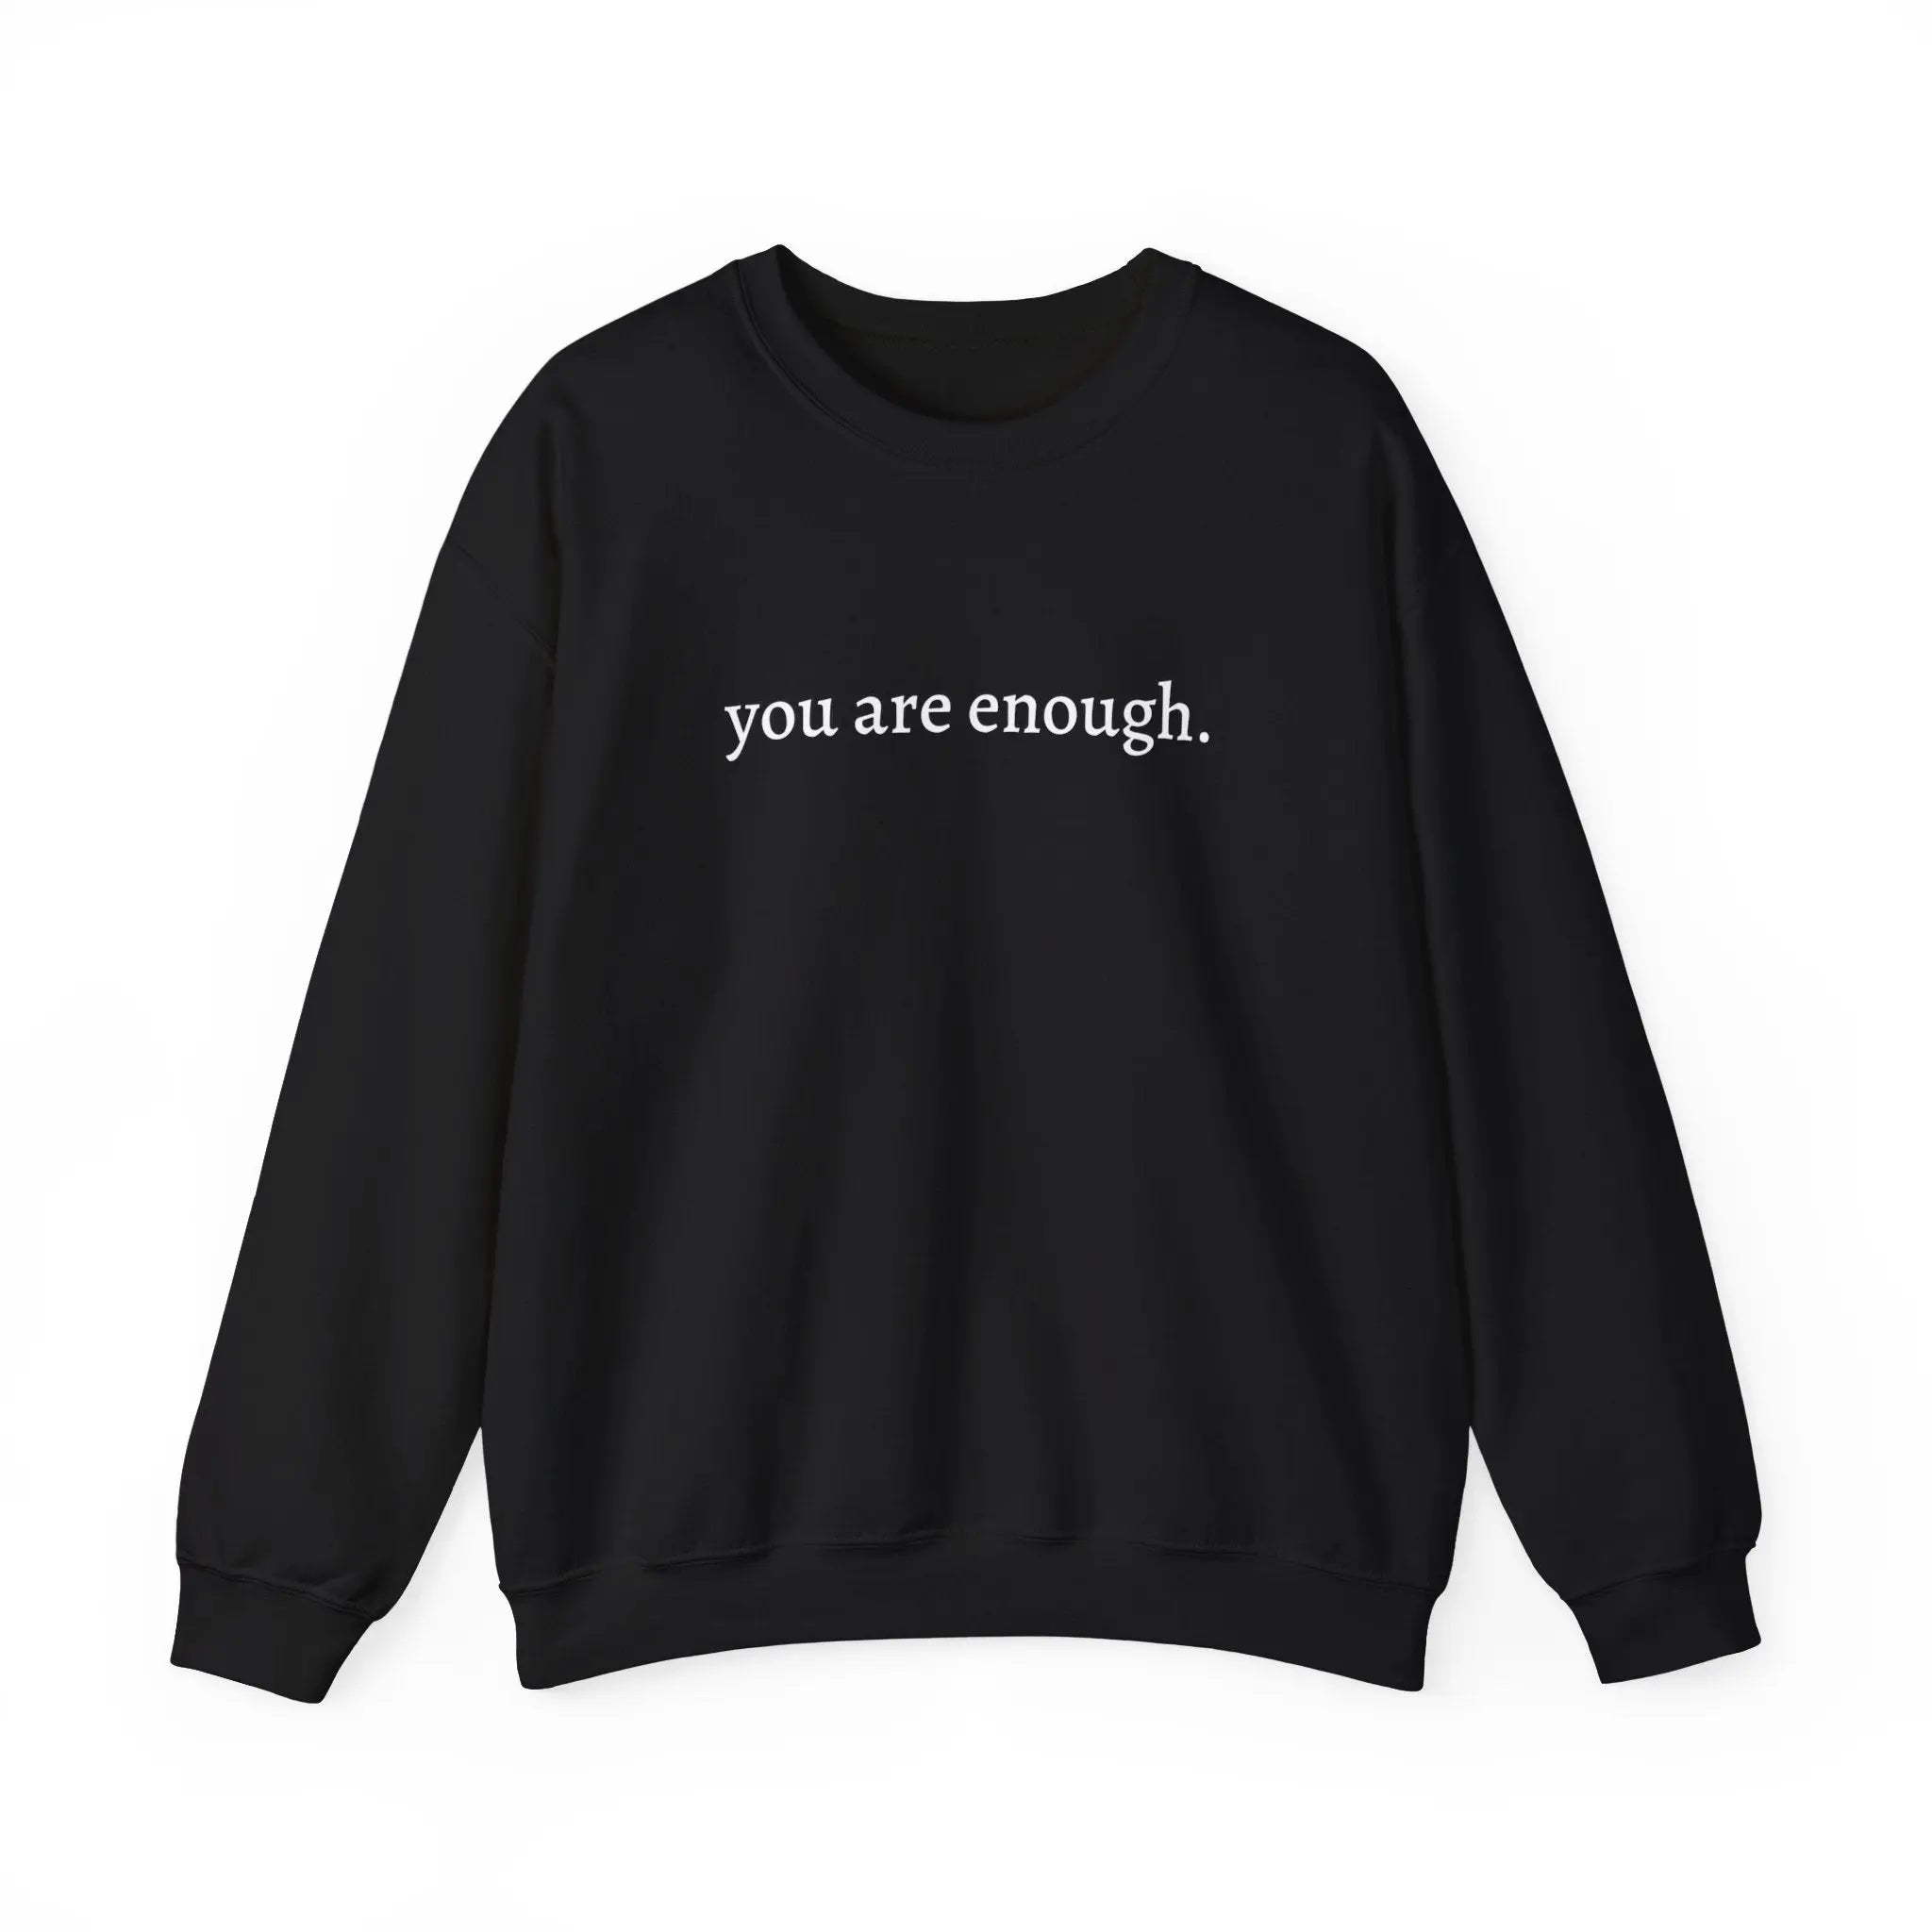 'Dear Person Behind Me' Sweatshirt